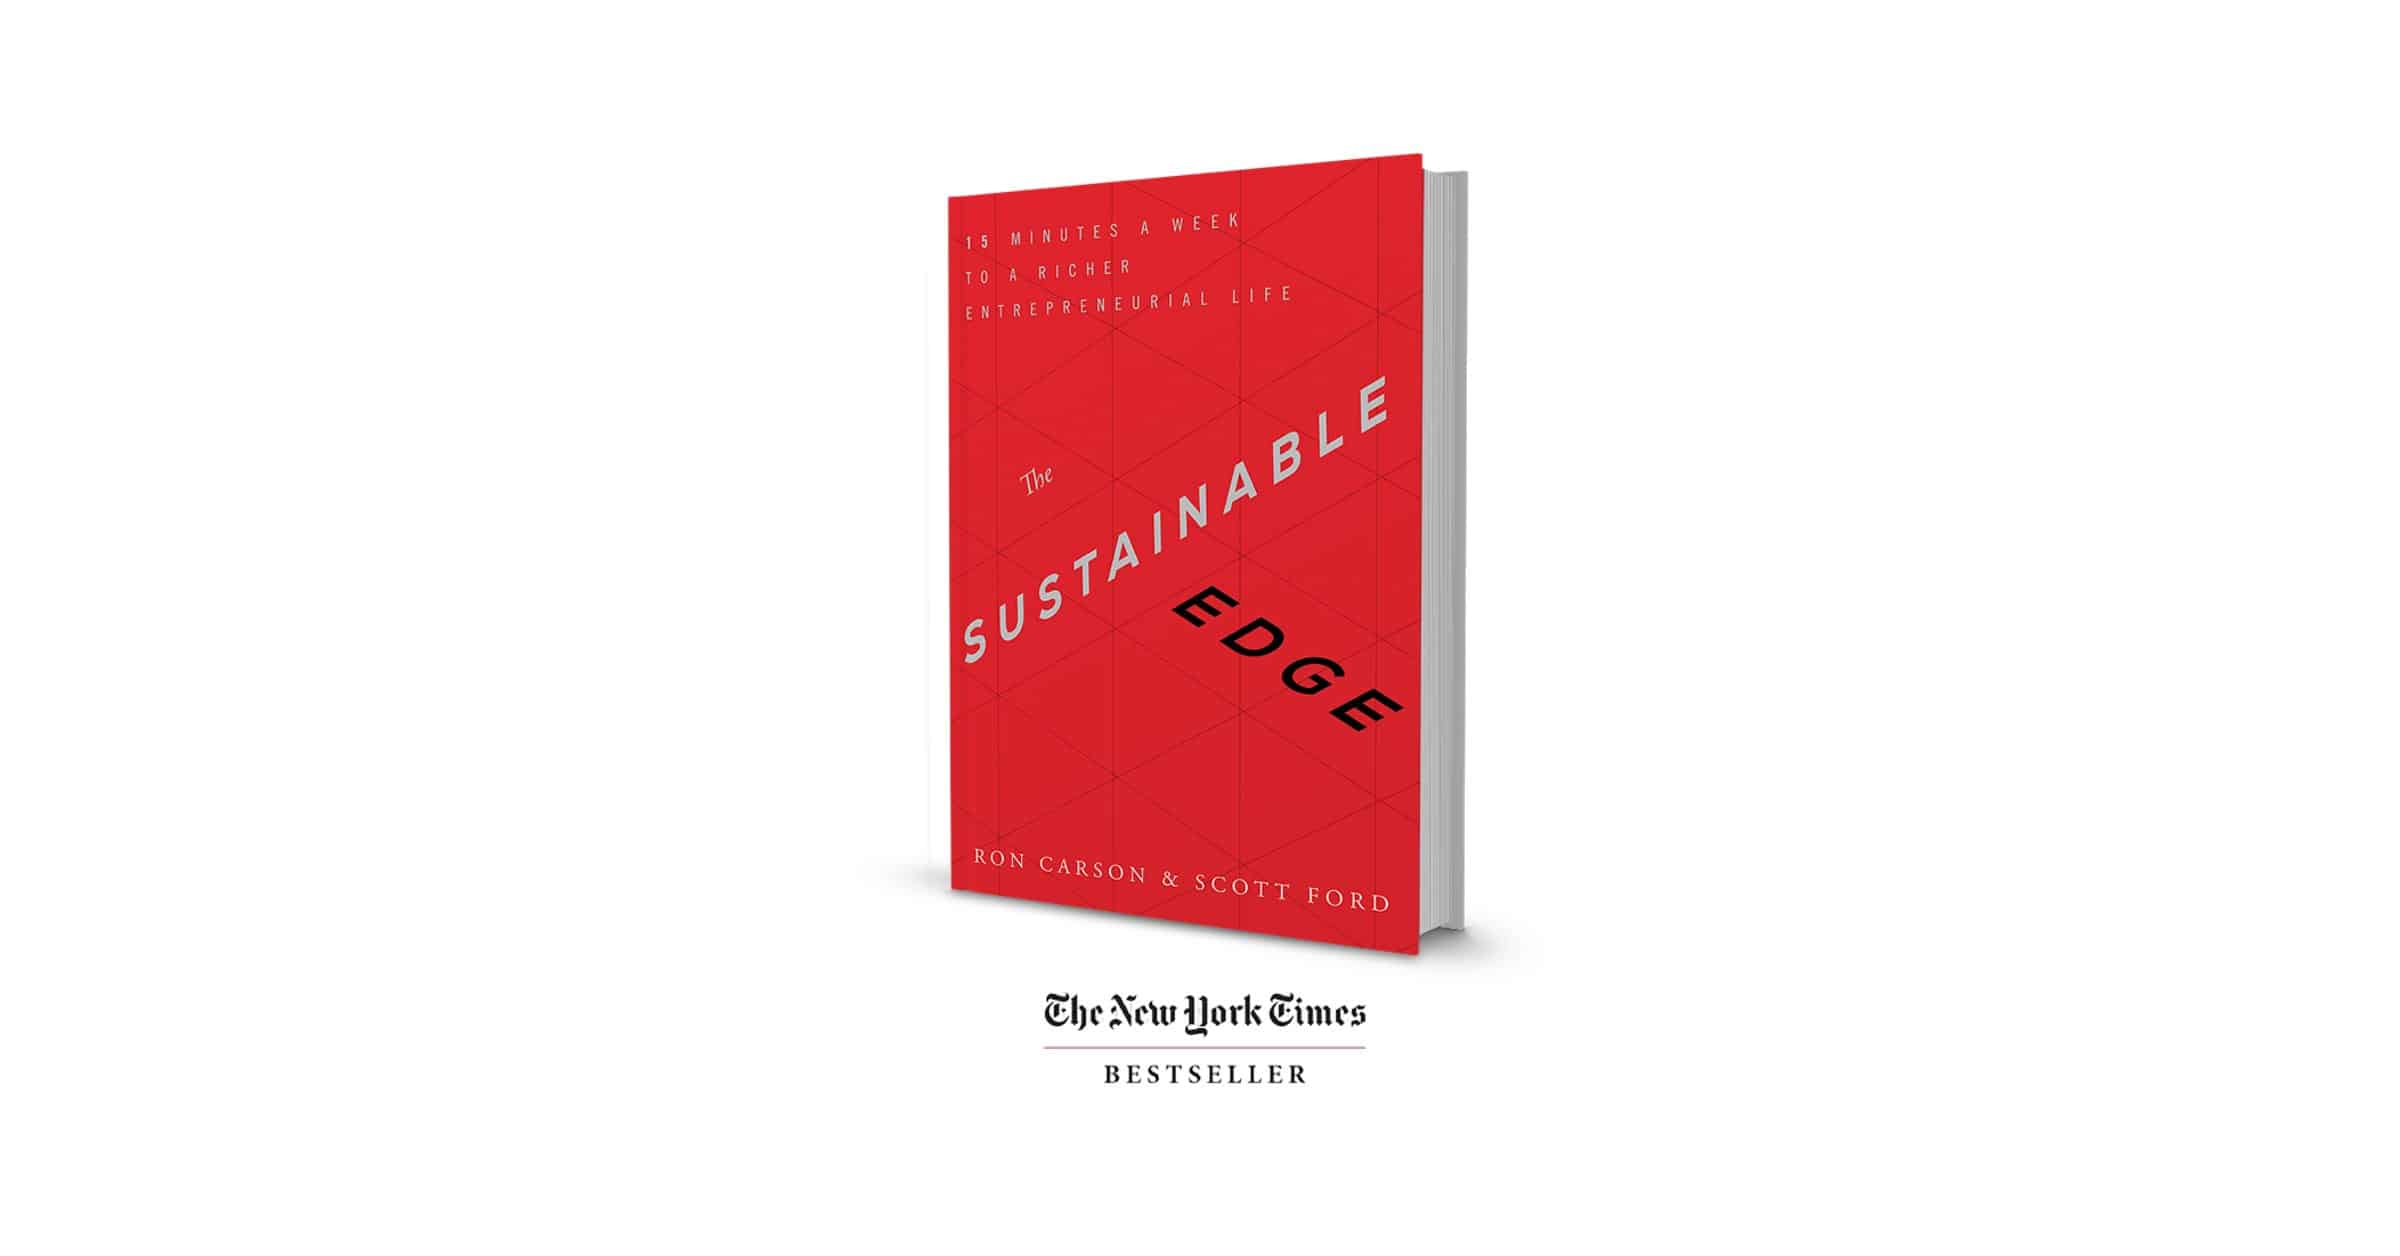 The Sustainable Edge